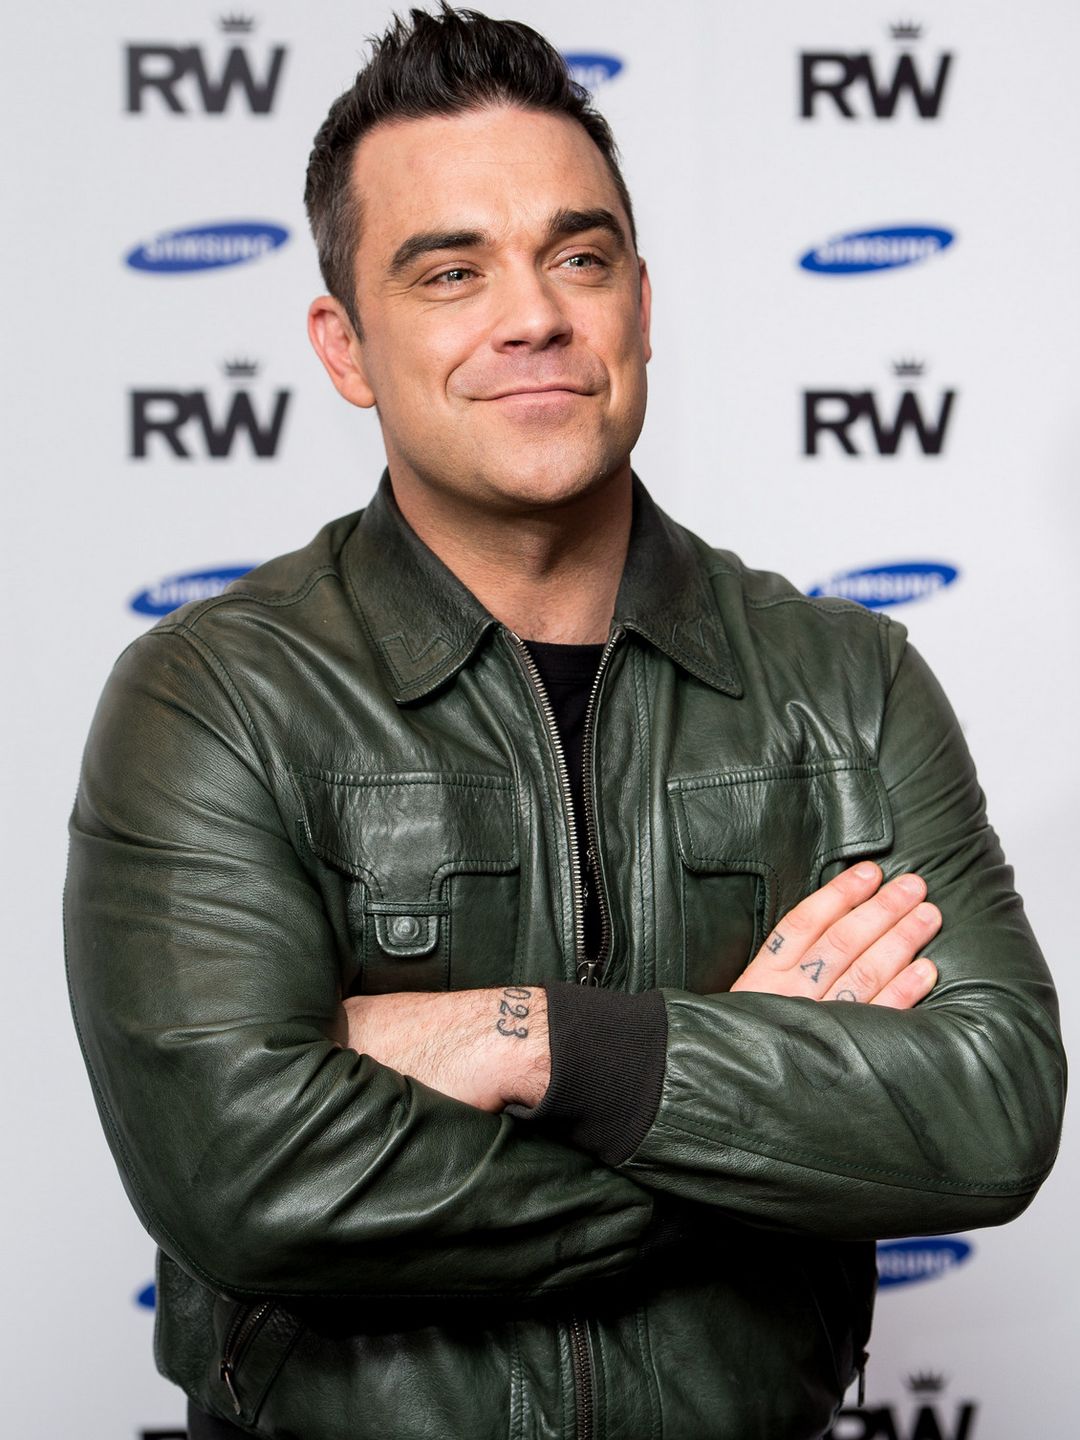 Robbie Williams childhood pics